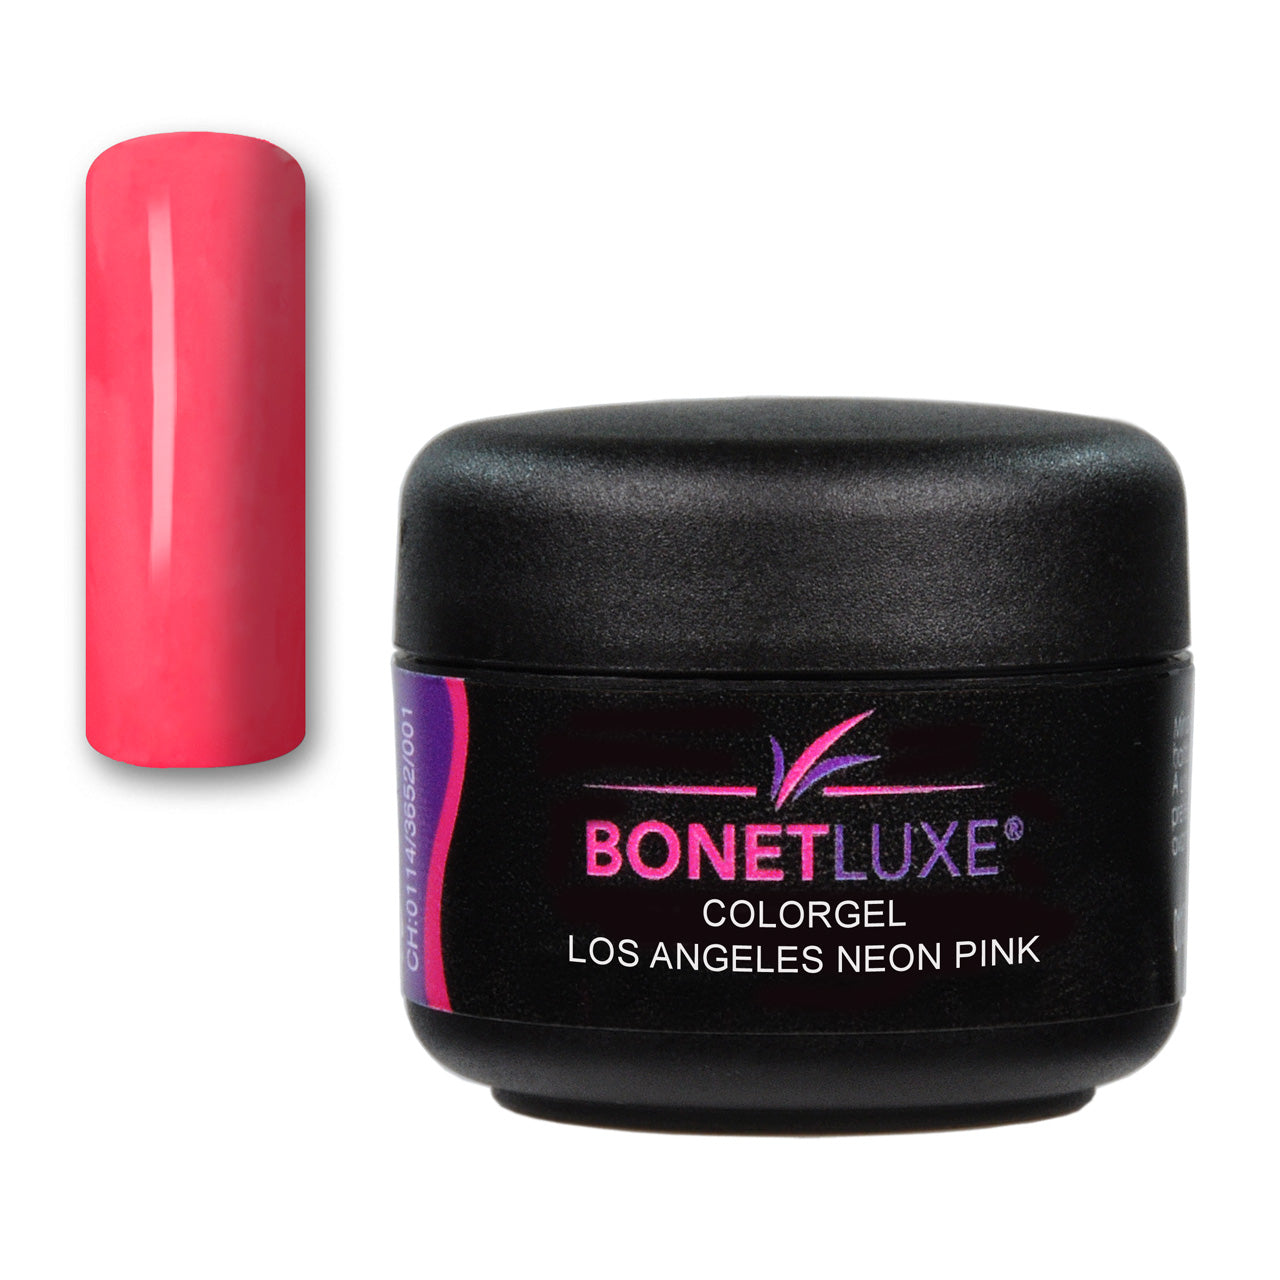 Bonetluxe Colorgel Los Angeles Neon Pink